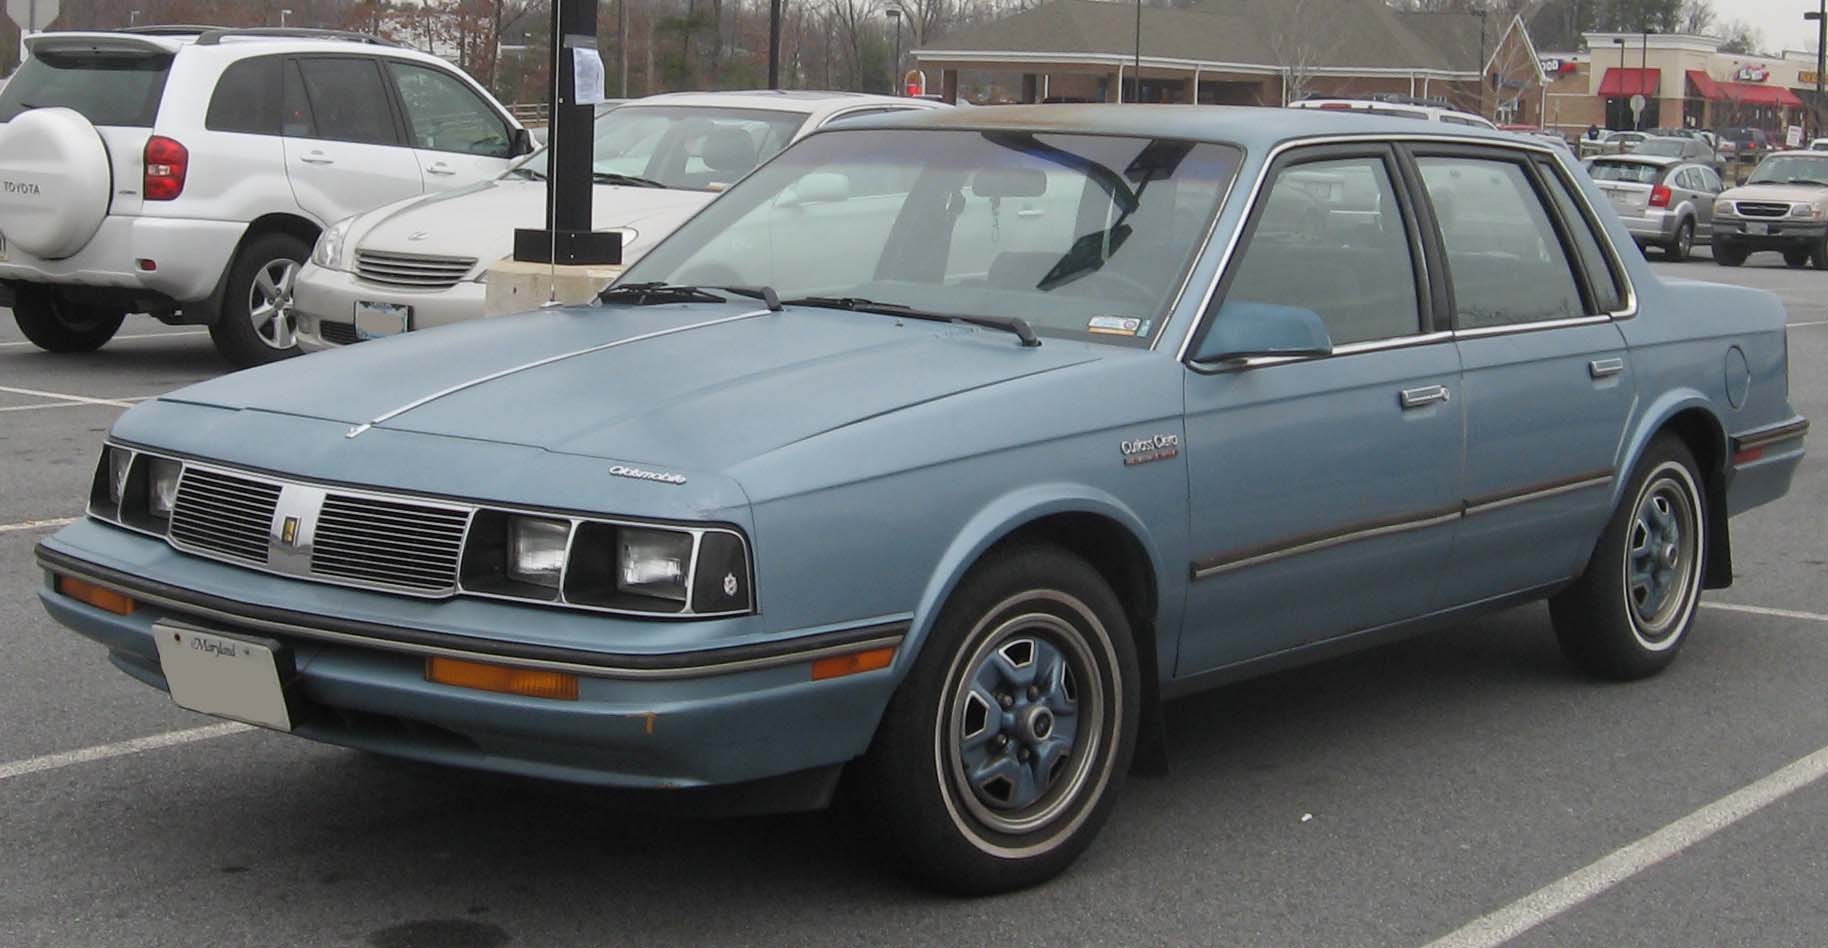 File:1985-88 Oldsmobile Cutlass Ciera.jpg - Wikipedia, the free encyclopedia